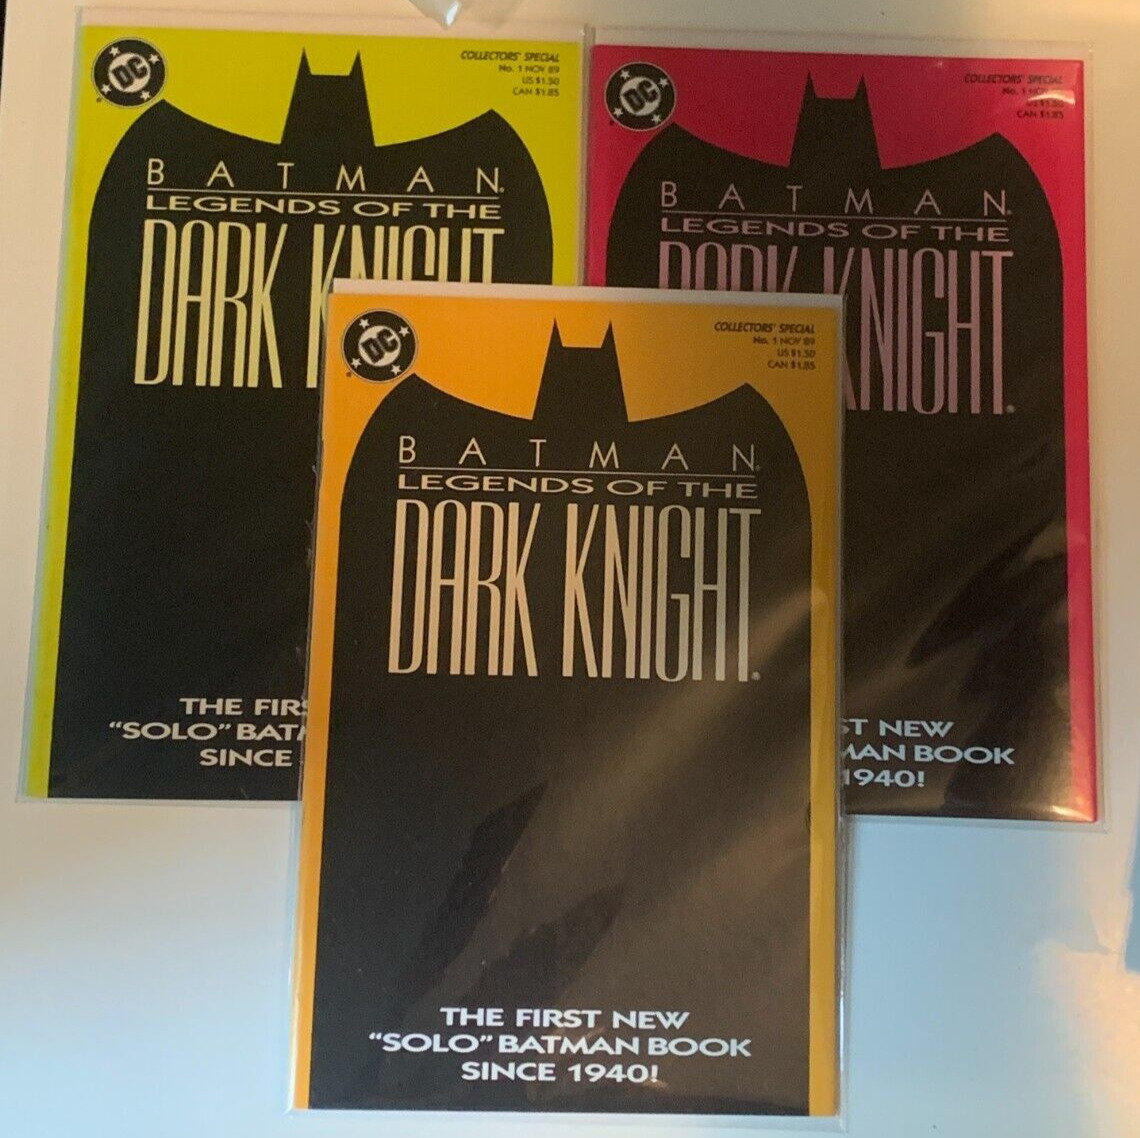 BATMAN LEGENDS OF THE DARK KNIGHT #1 NM COVER A - HOT PINK & ORANGE VARIANTS